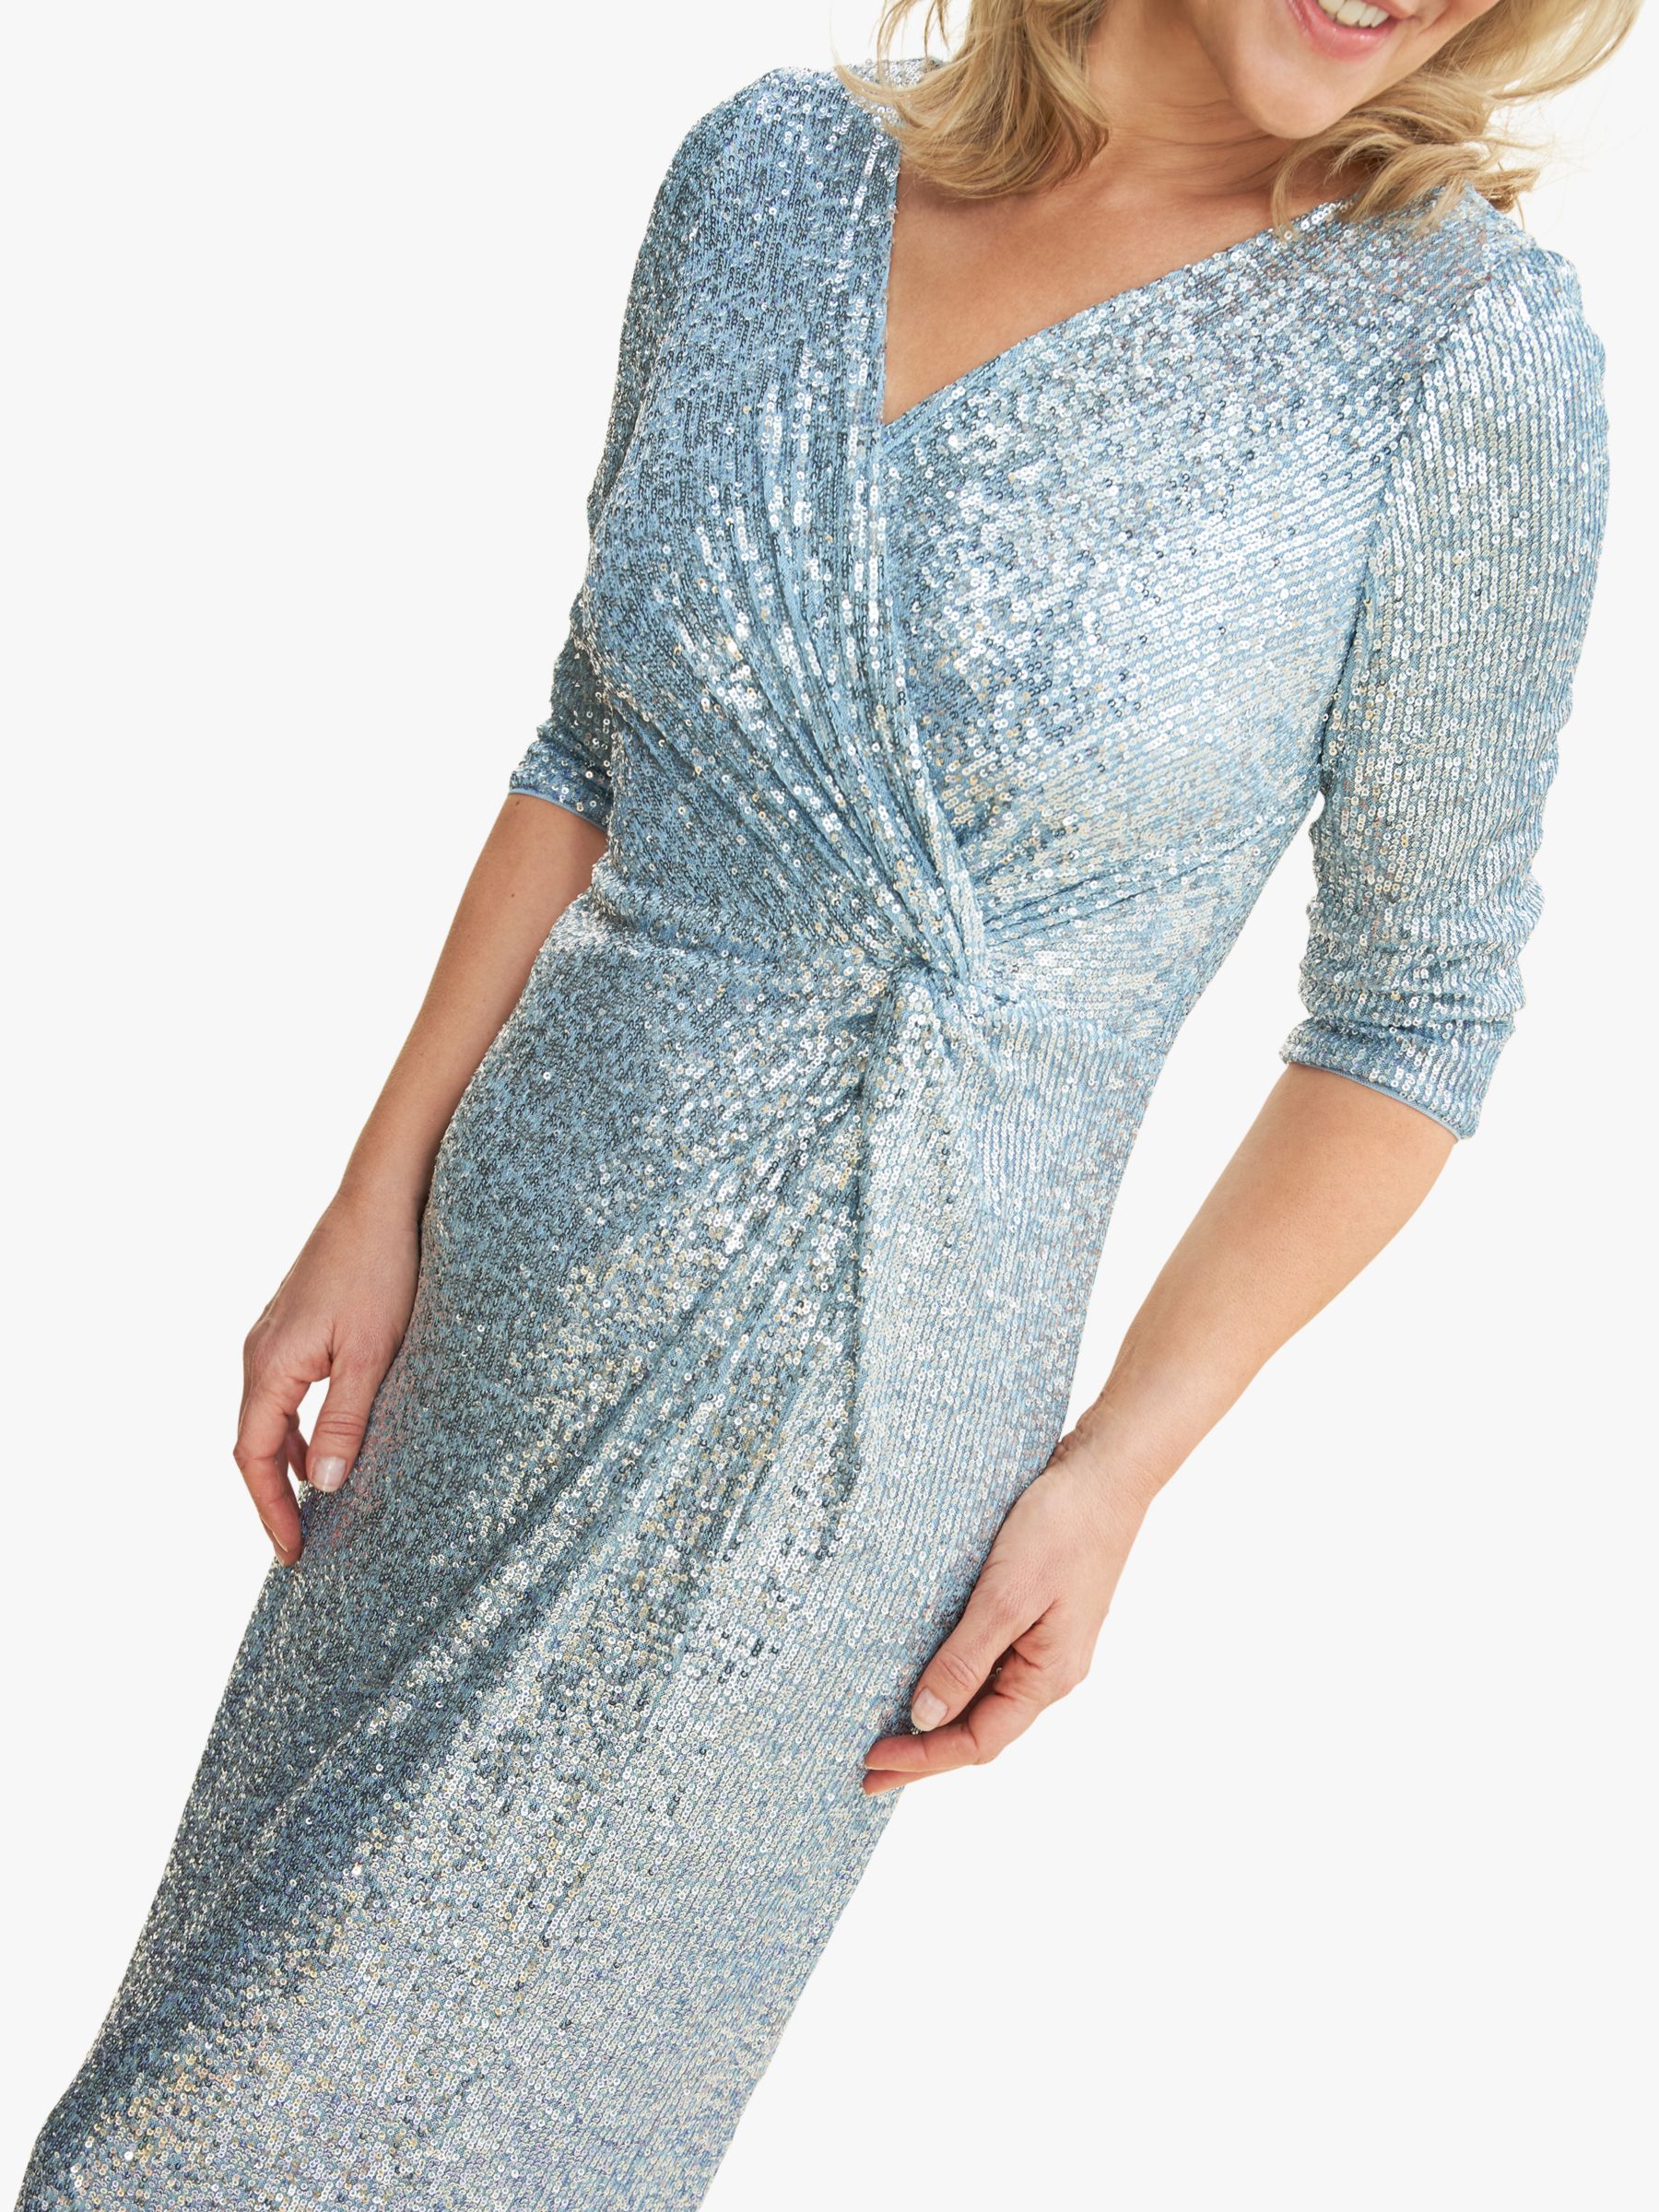 Buy Gina Bacconi Jacynda Sequin Wrap Front Maxi Dress Online at johnlewis.com